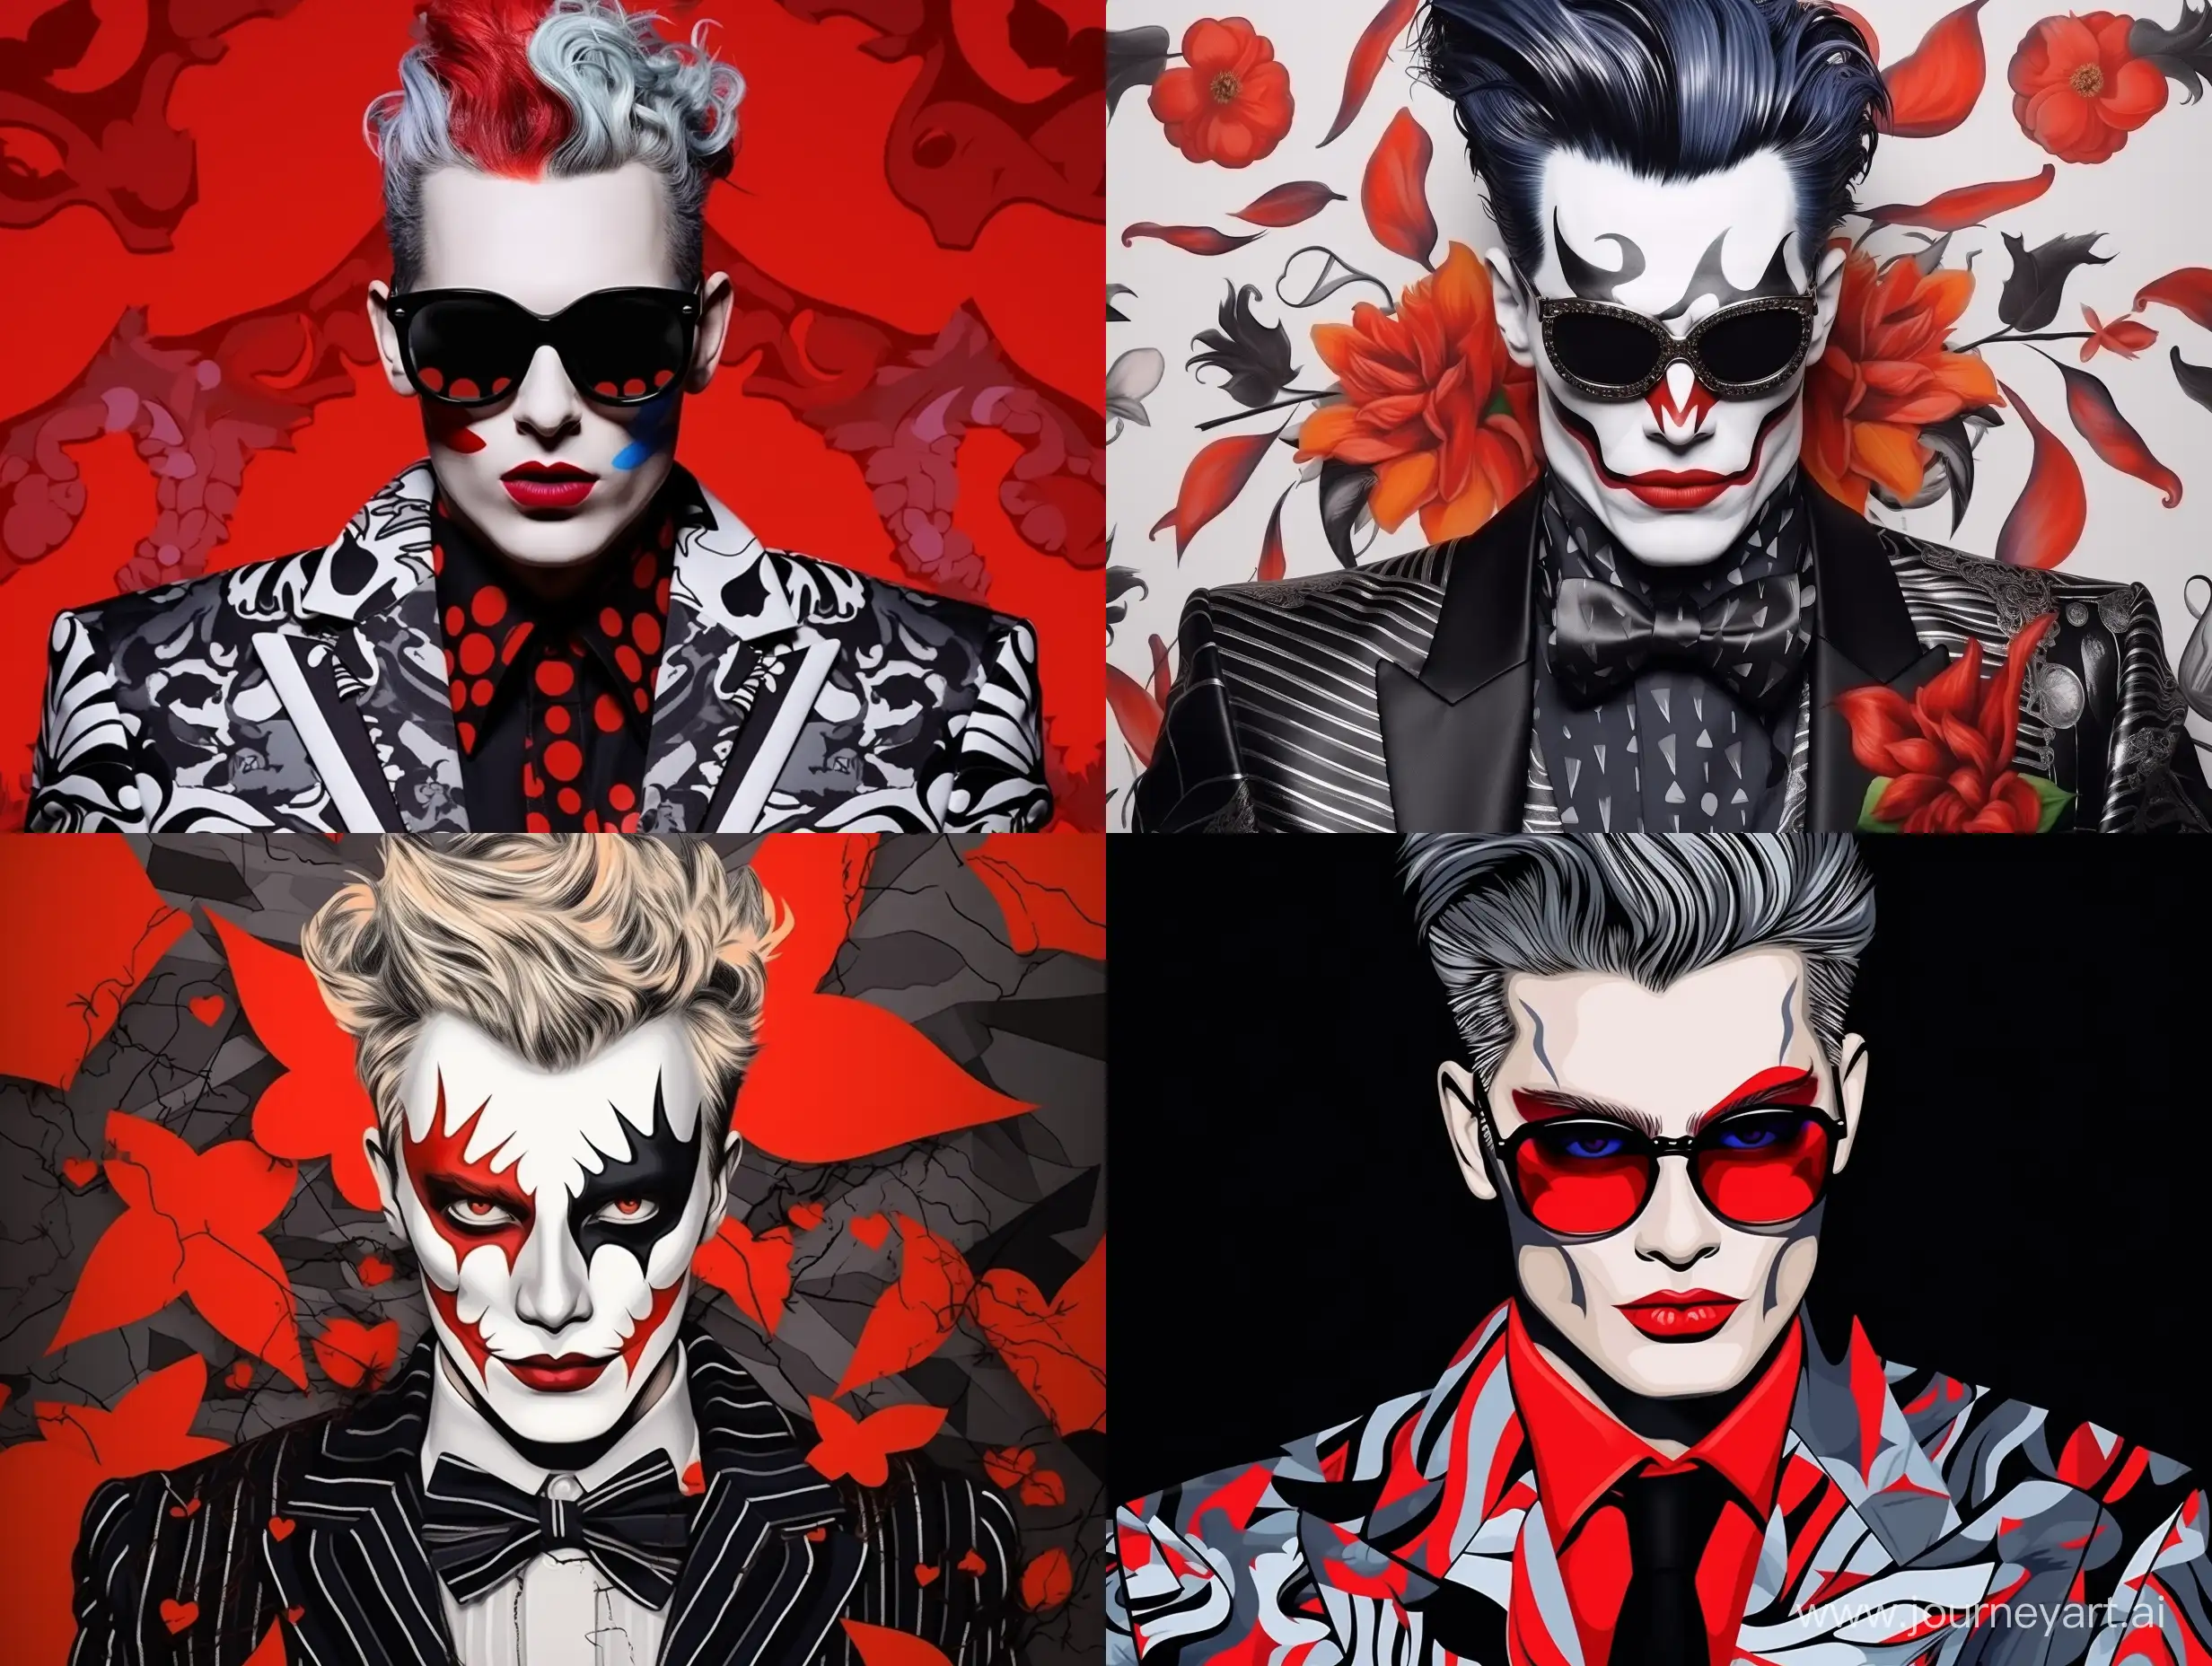 Detailed-Portrait-of-the-Joker-in-Pop-Art-Fashion-Illustration